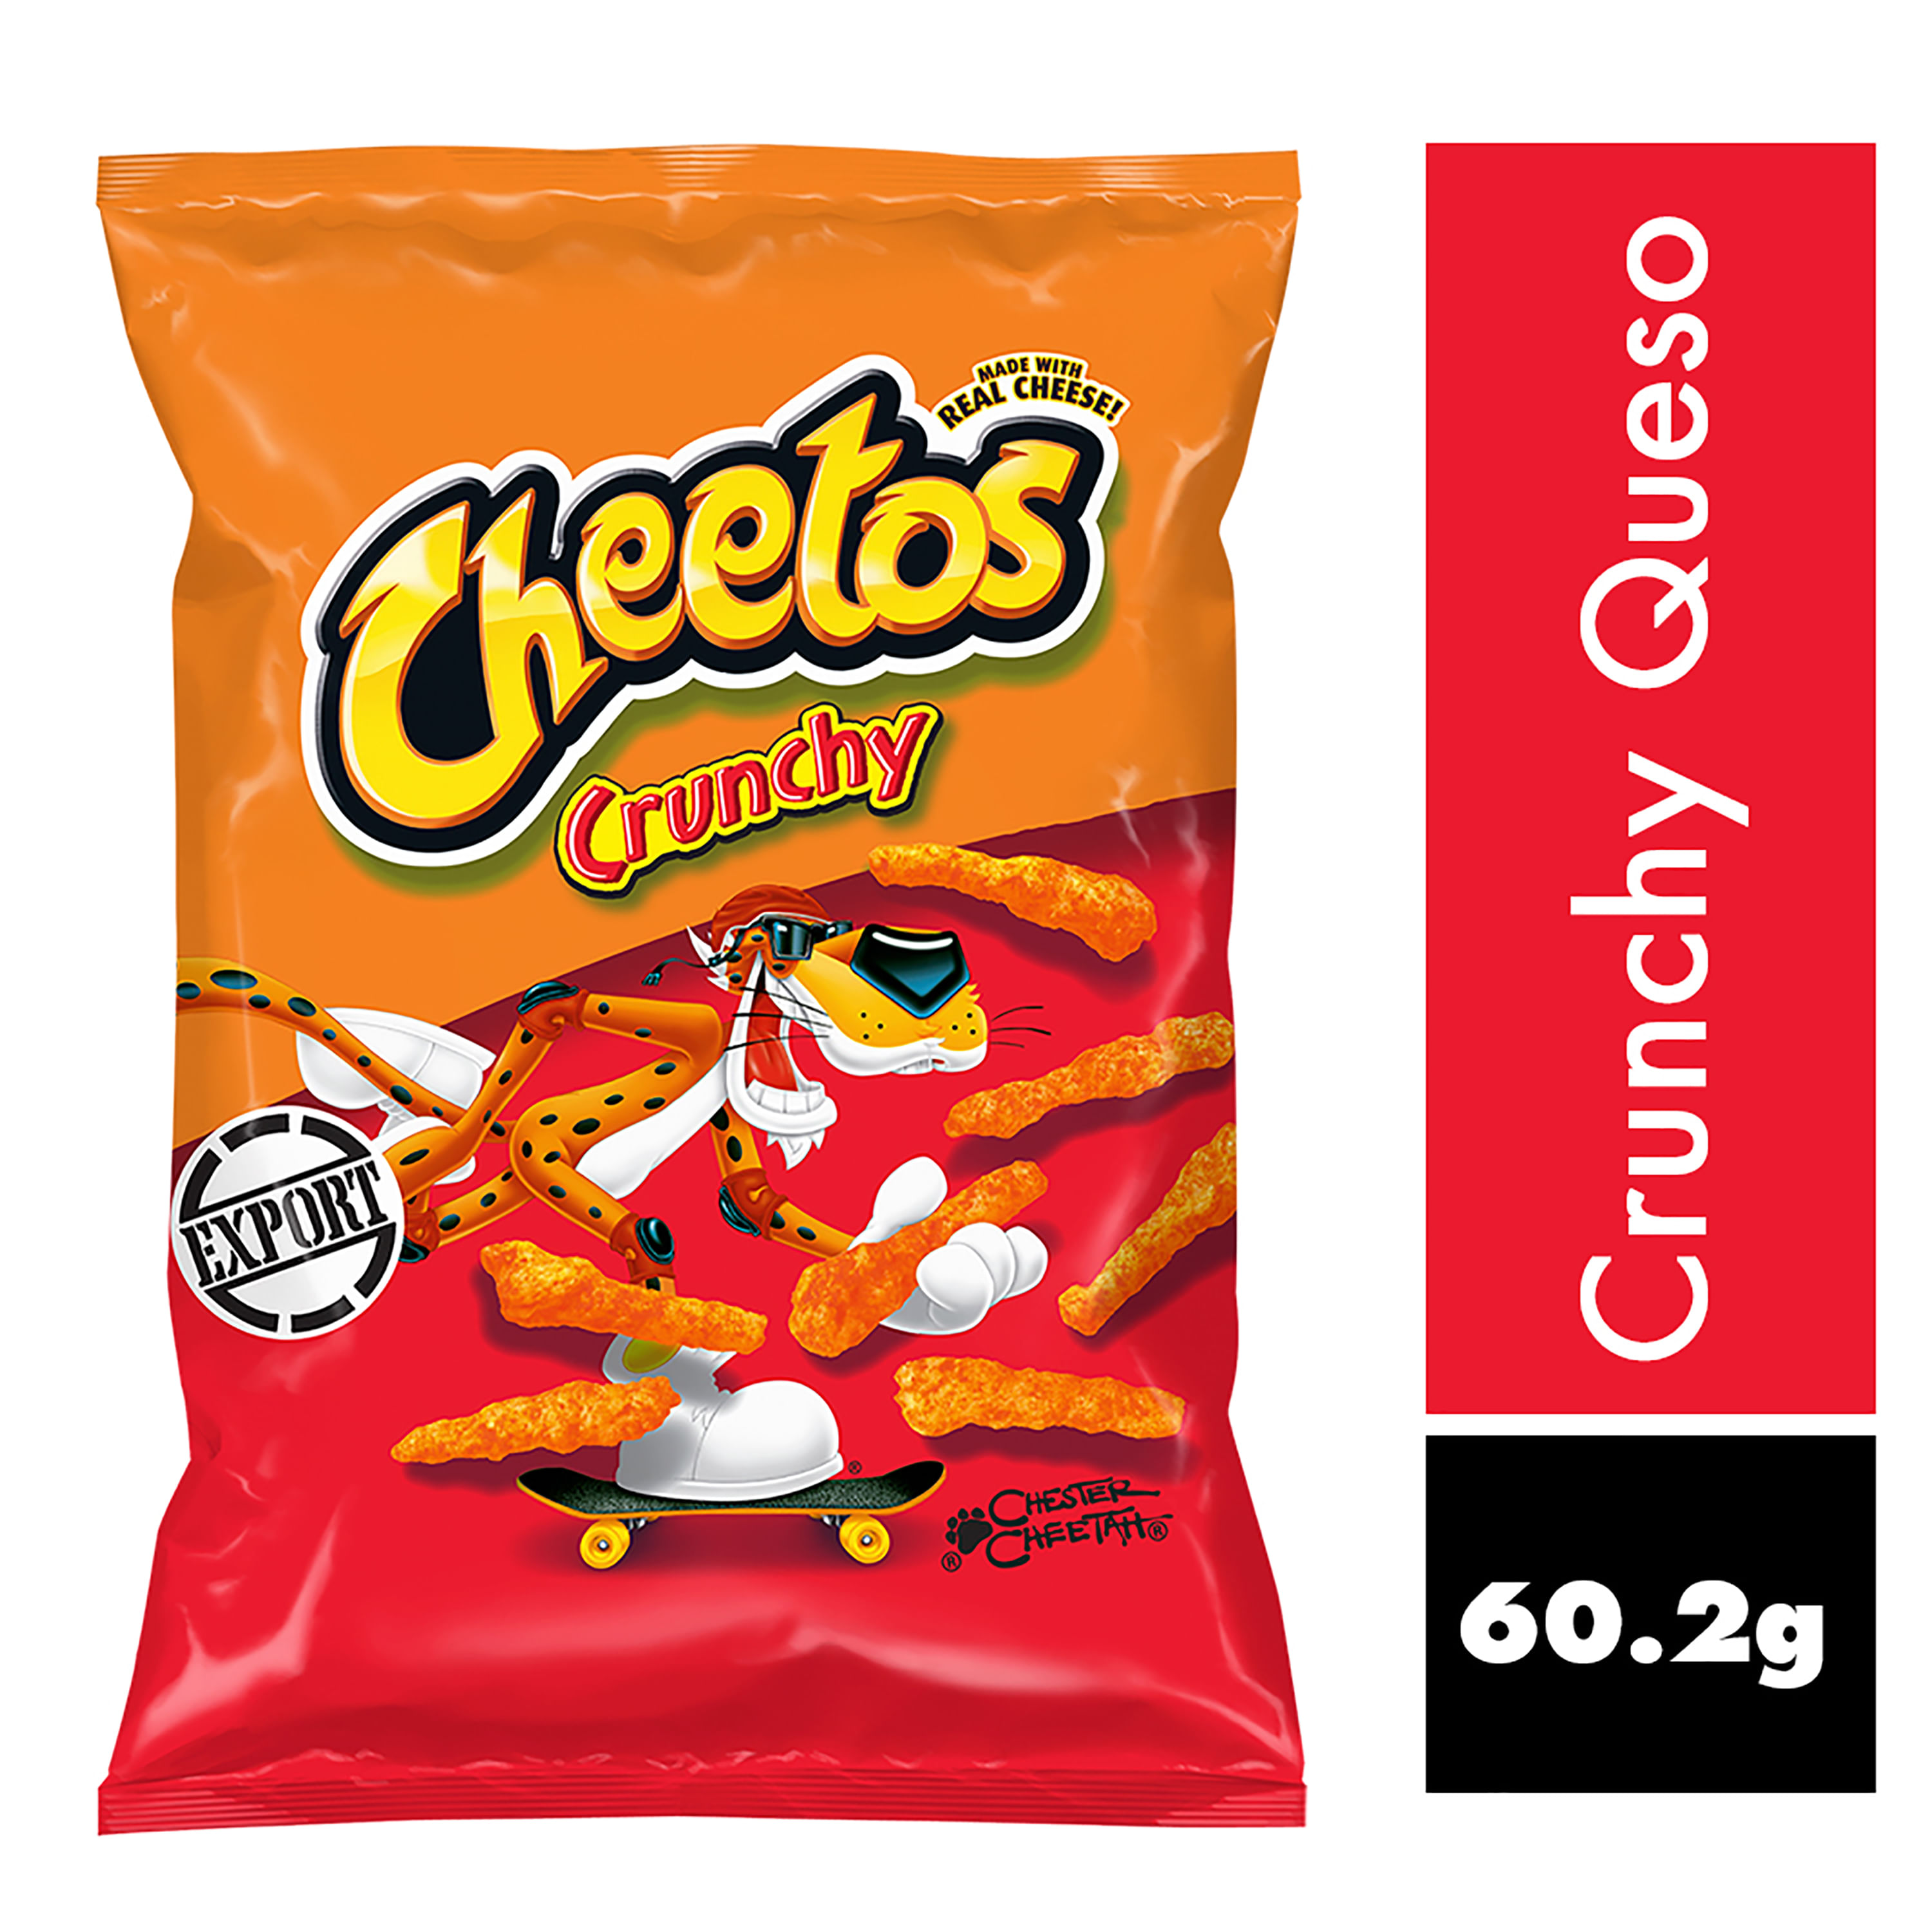 Cheetos-Crunchy-60-2gr-1-4677